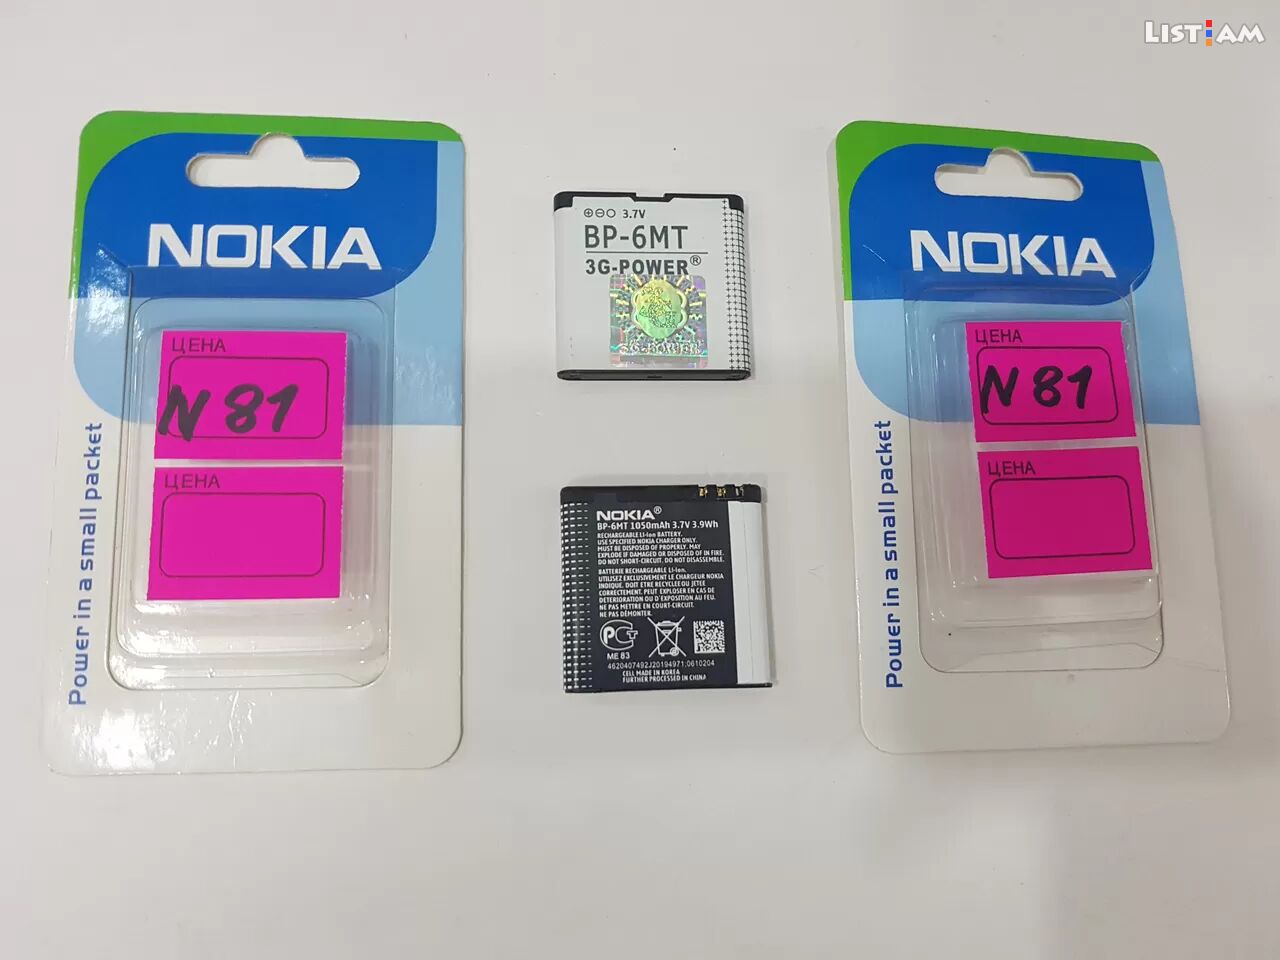 Nokia n81 battery